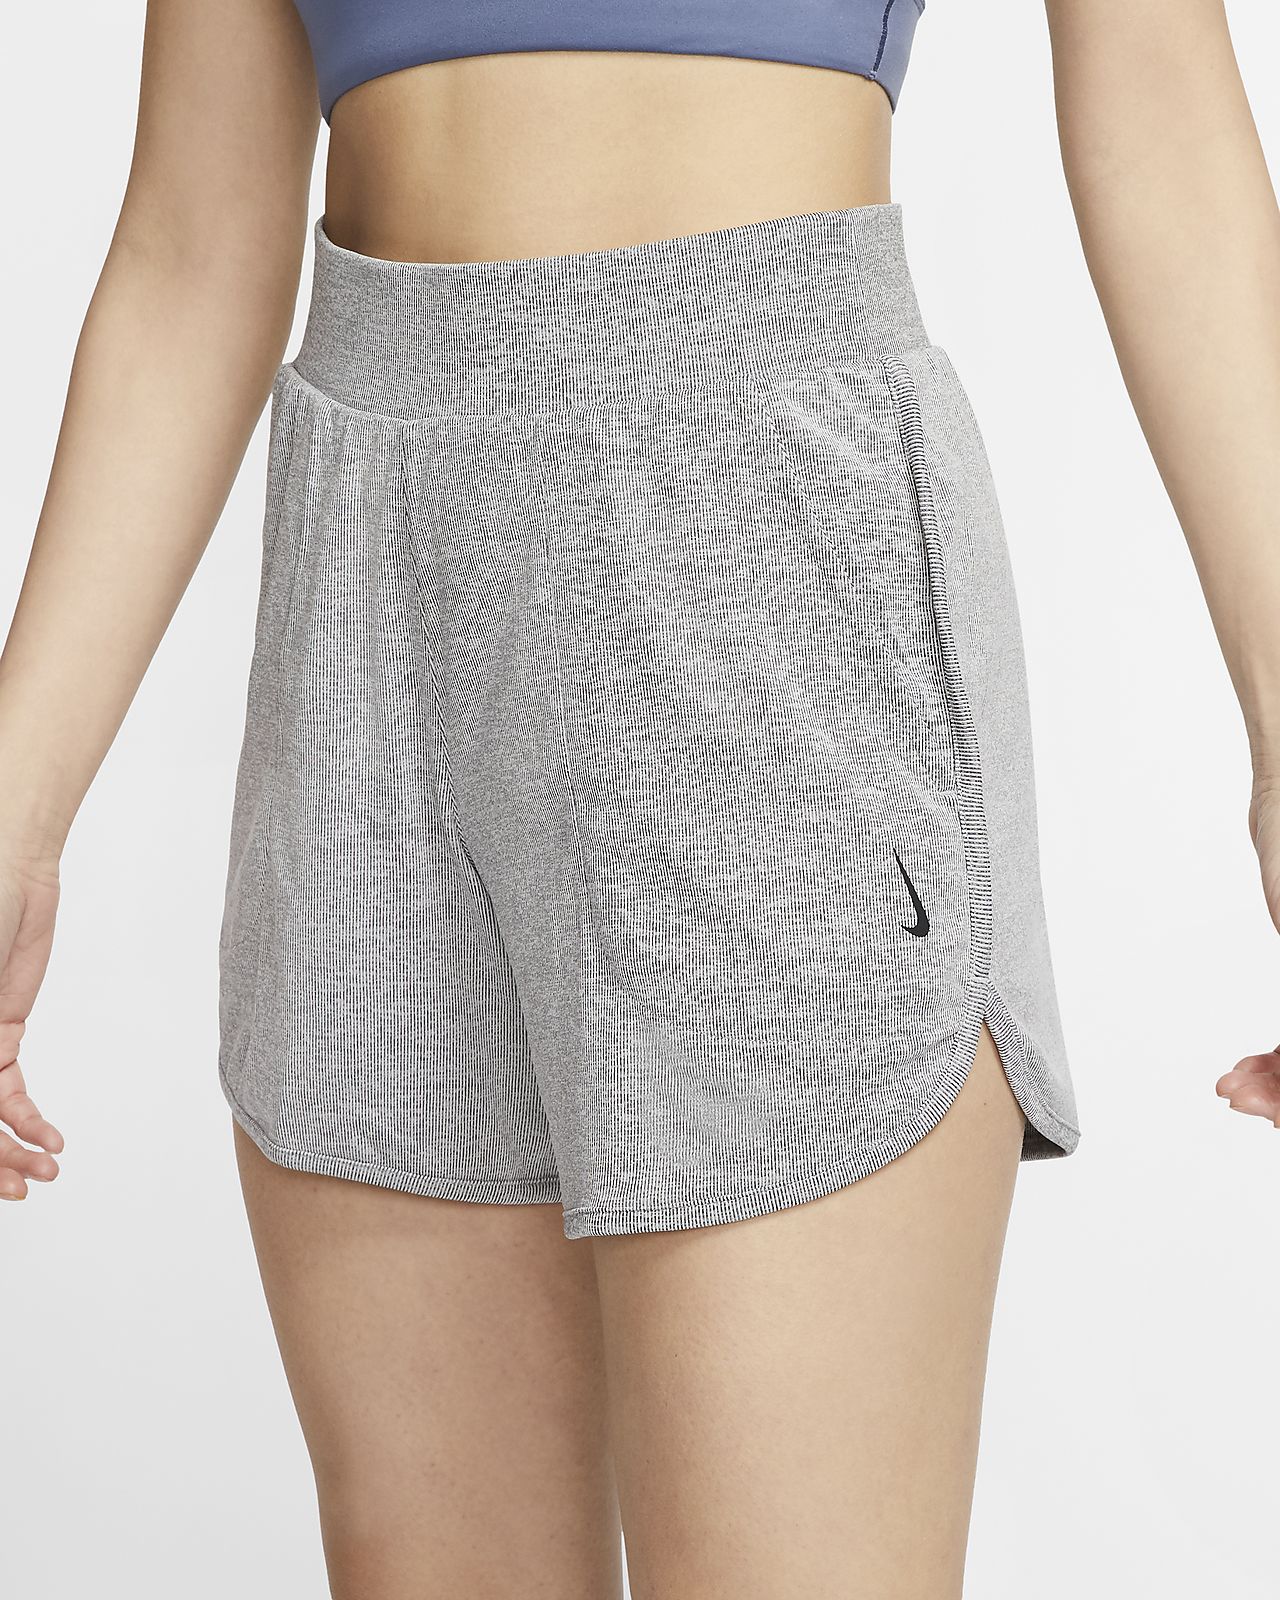 nike yoga shorts womens